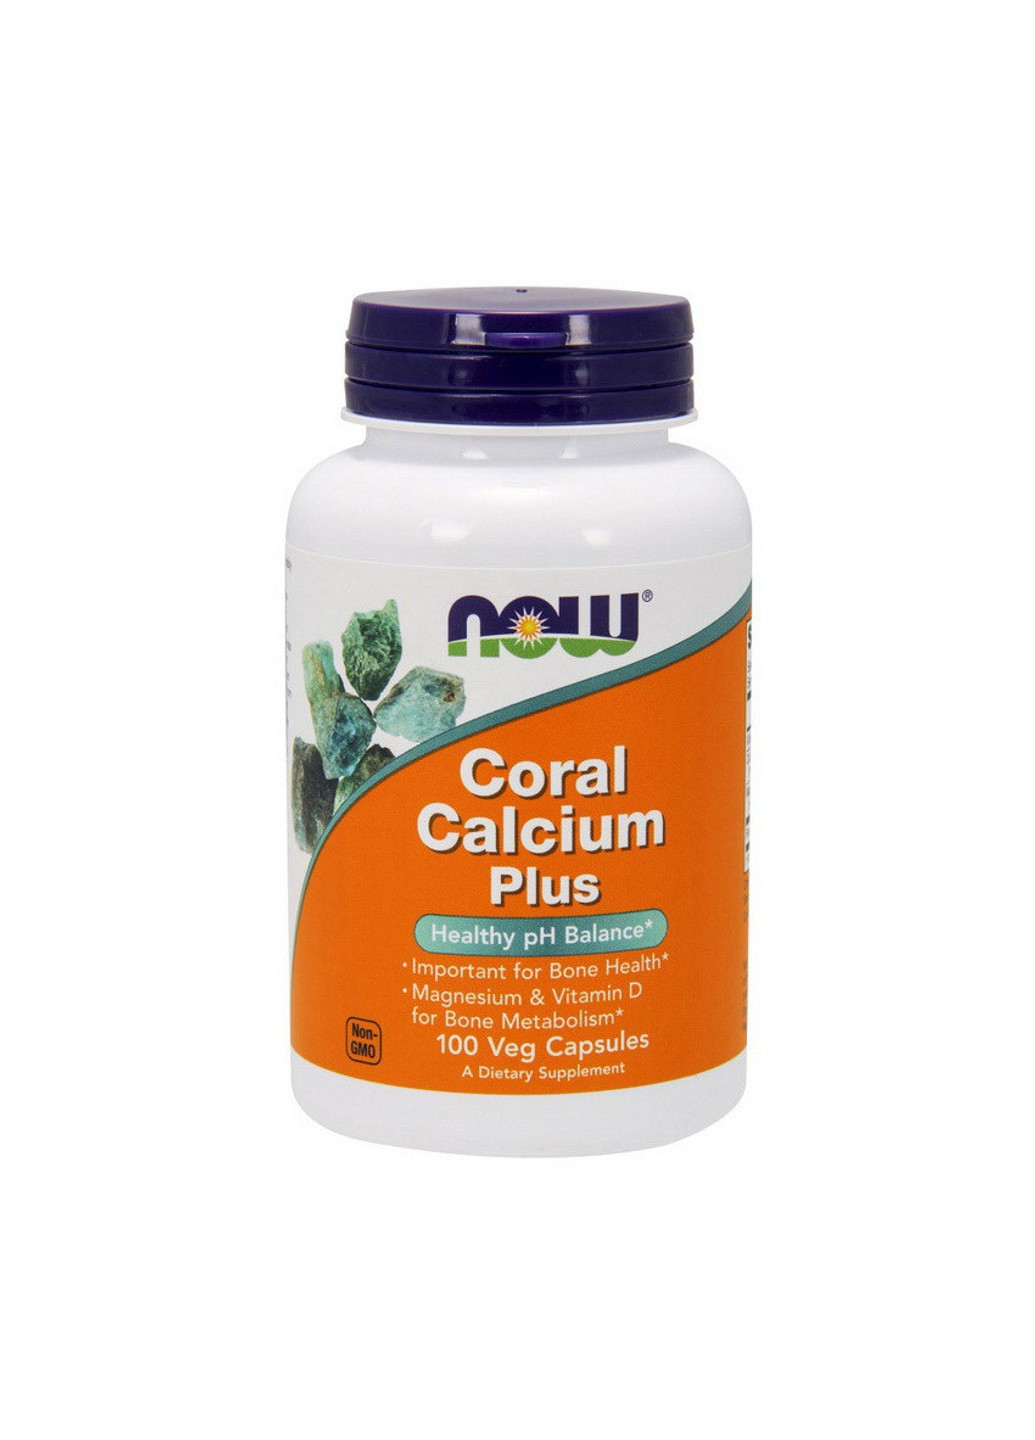 Коралловый кальций Coral Calcium Plus (100 капс) нау фудс Now Foods (255408861)